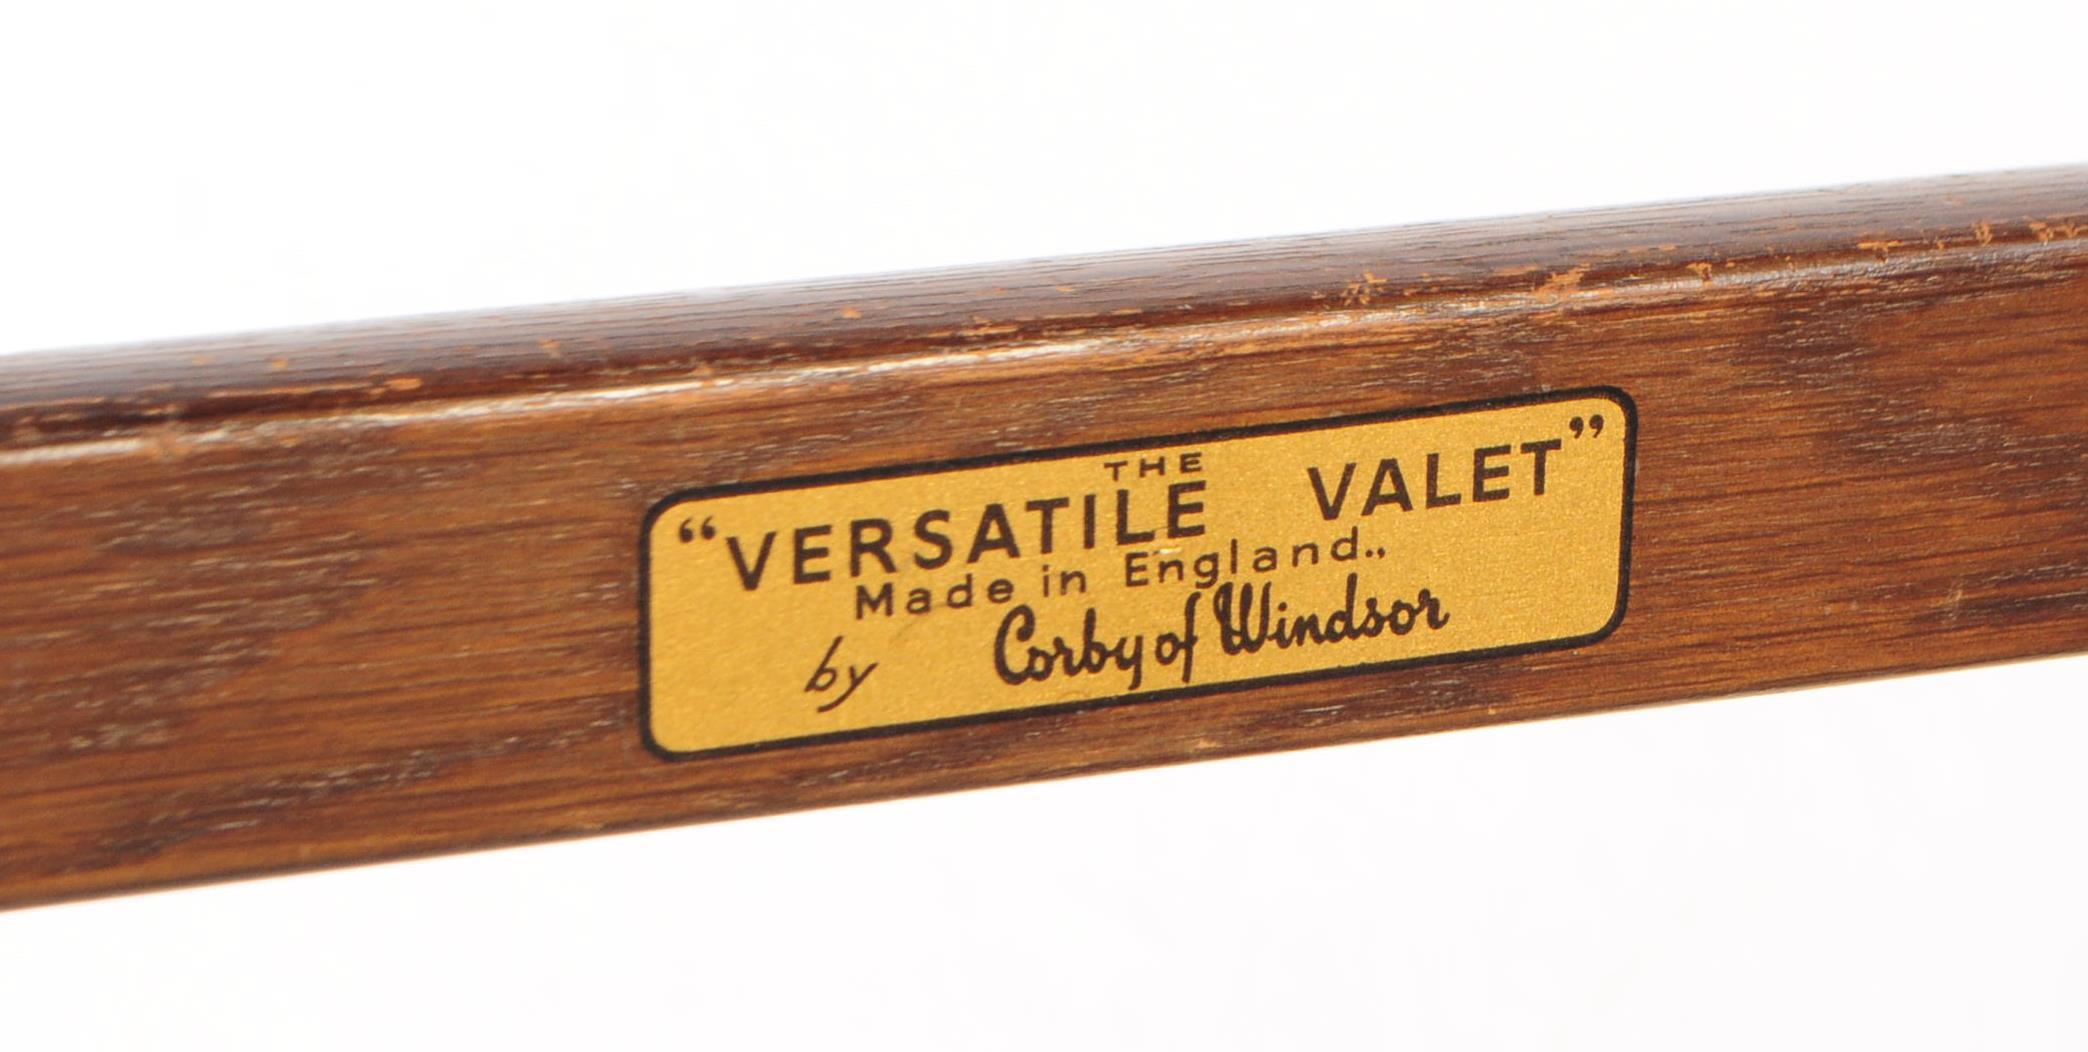 VERSATILE GENTLEMAN'S VALET STAND BY CORBY OF WINDSOR - Image 2 of 4